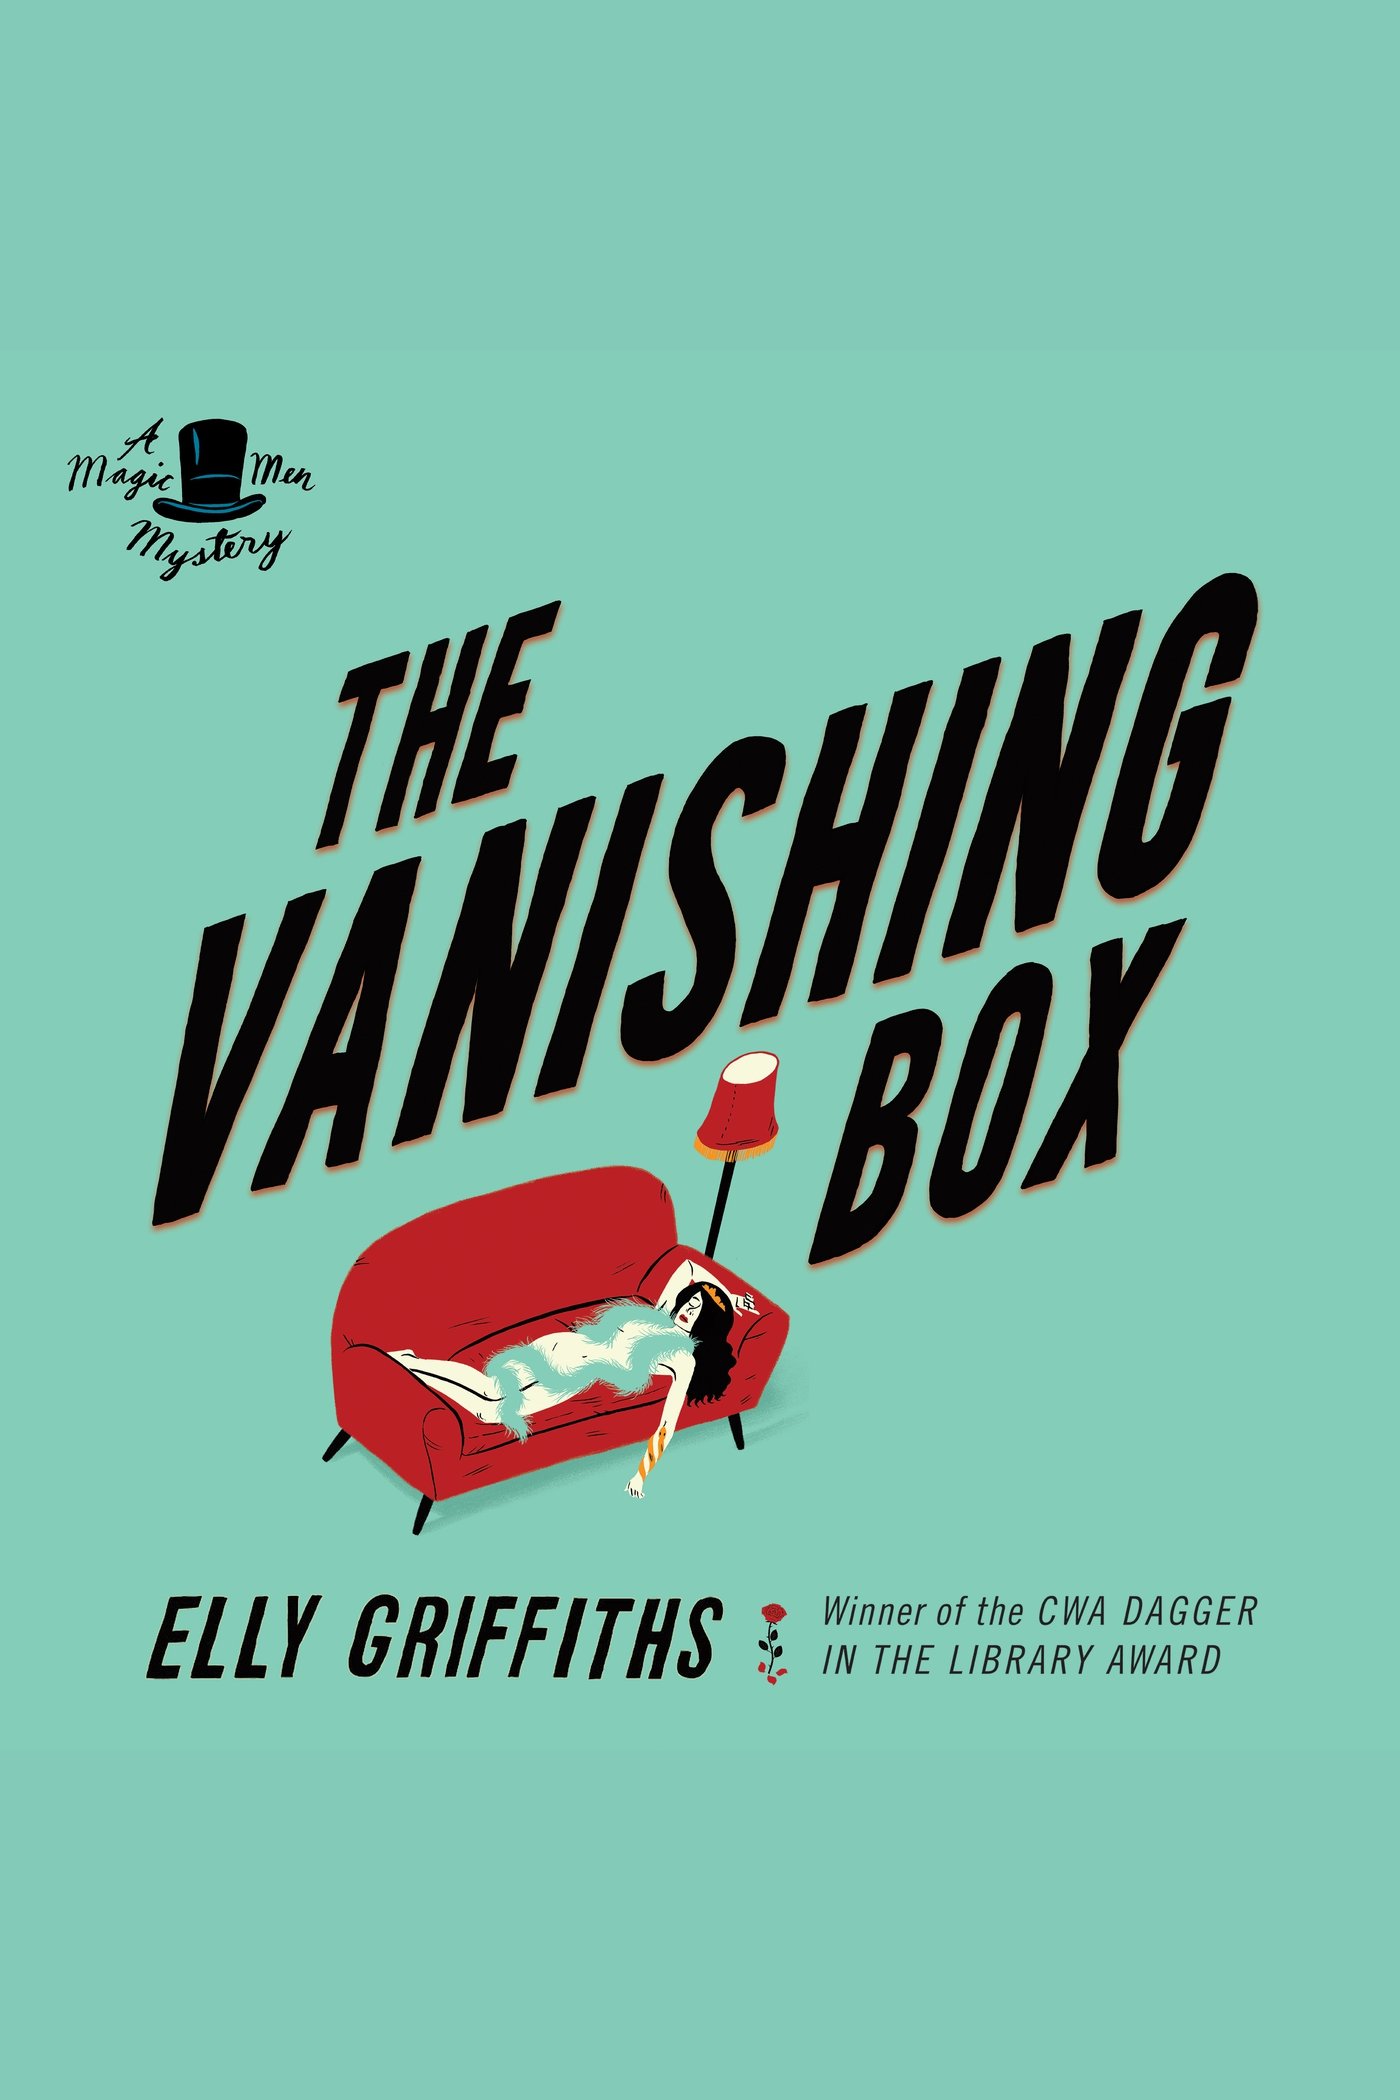 The Vanishing Box cover image